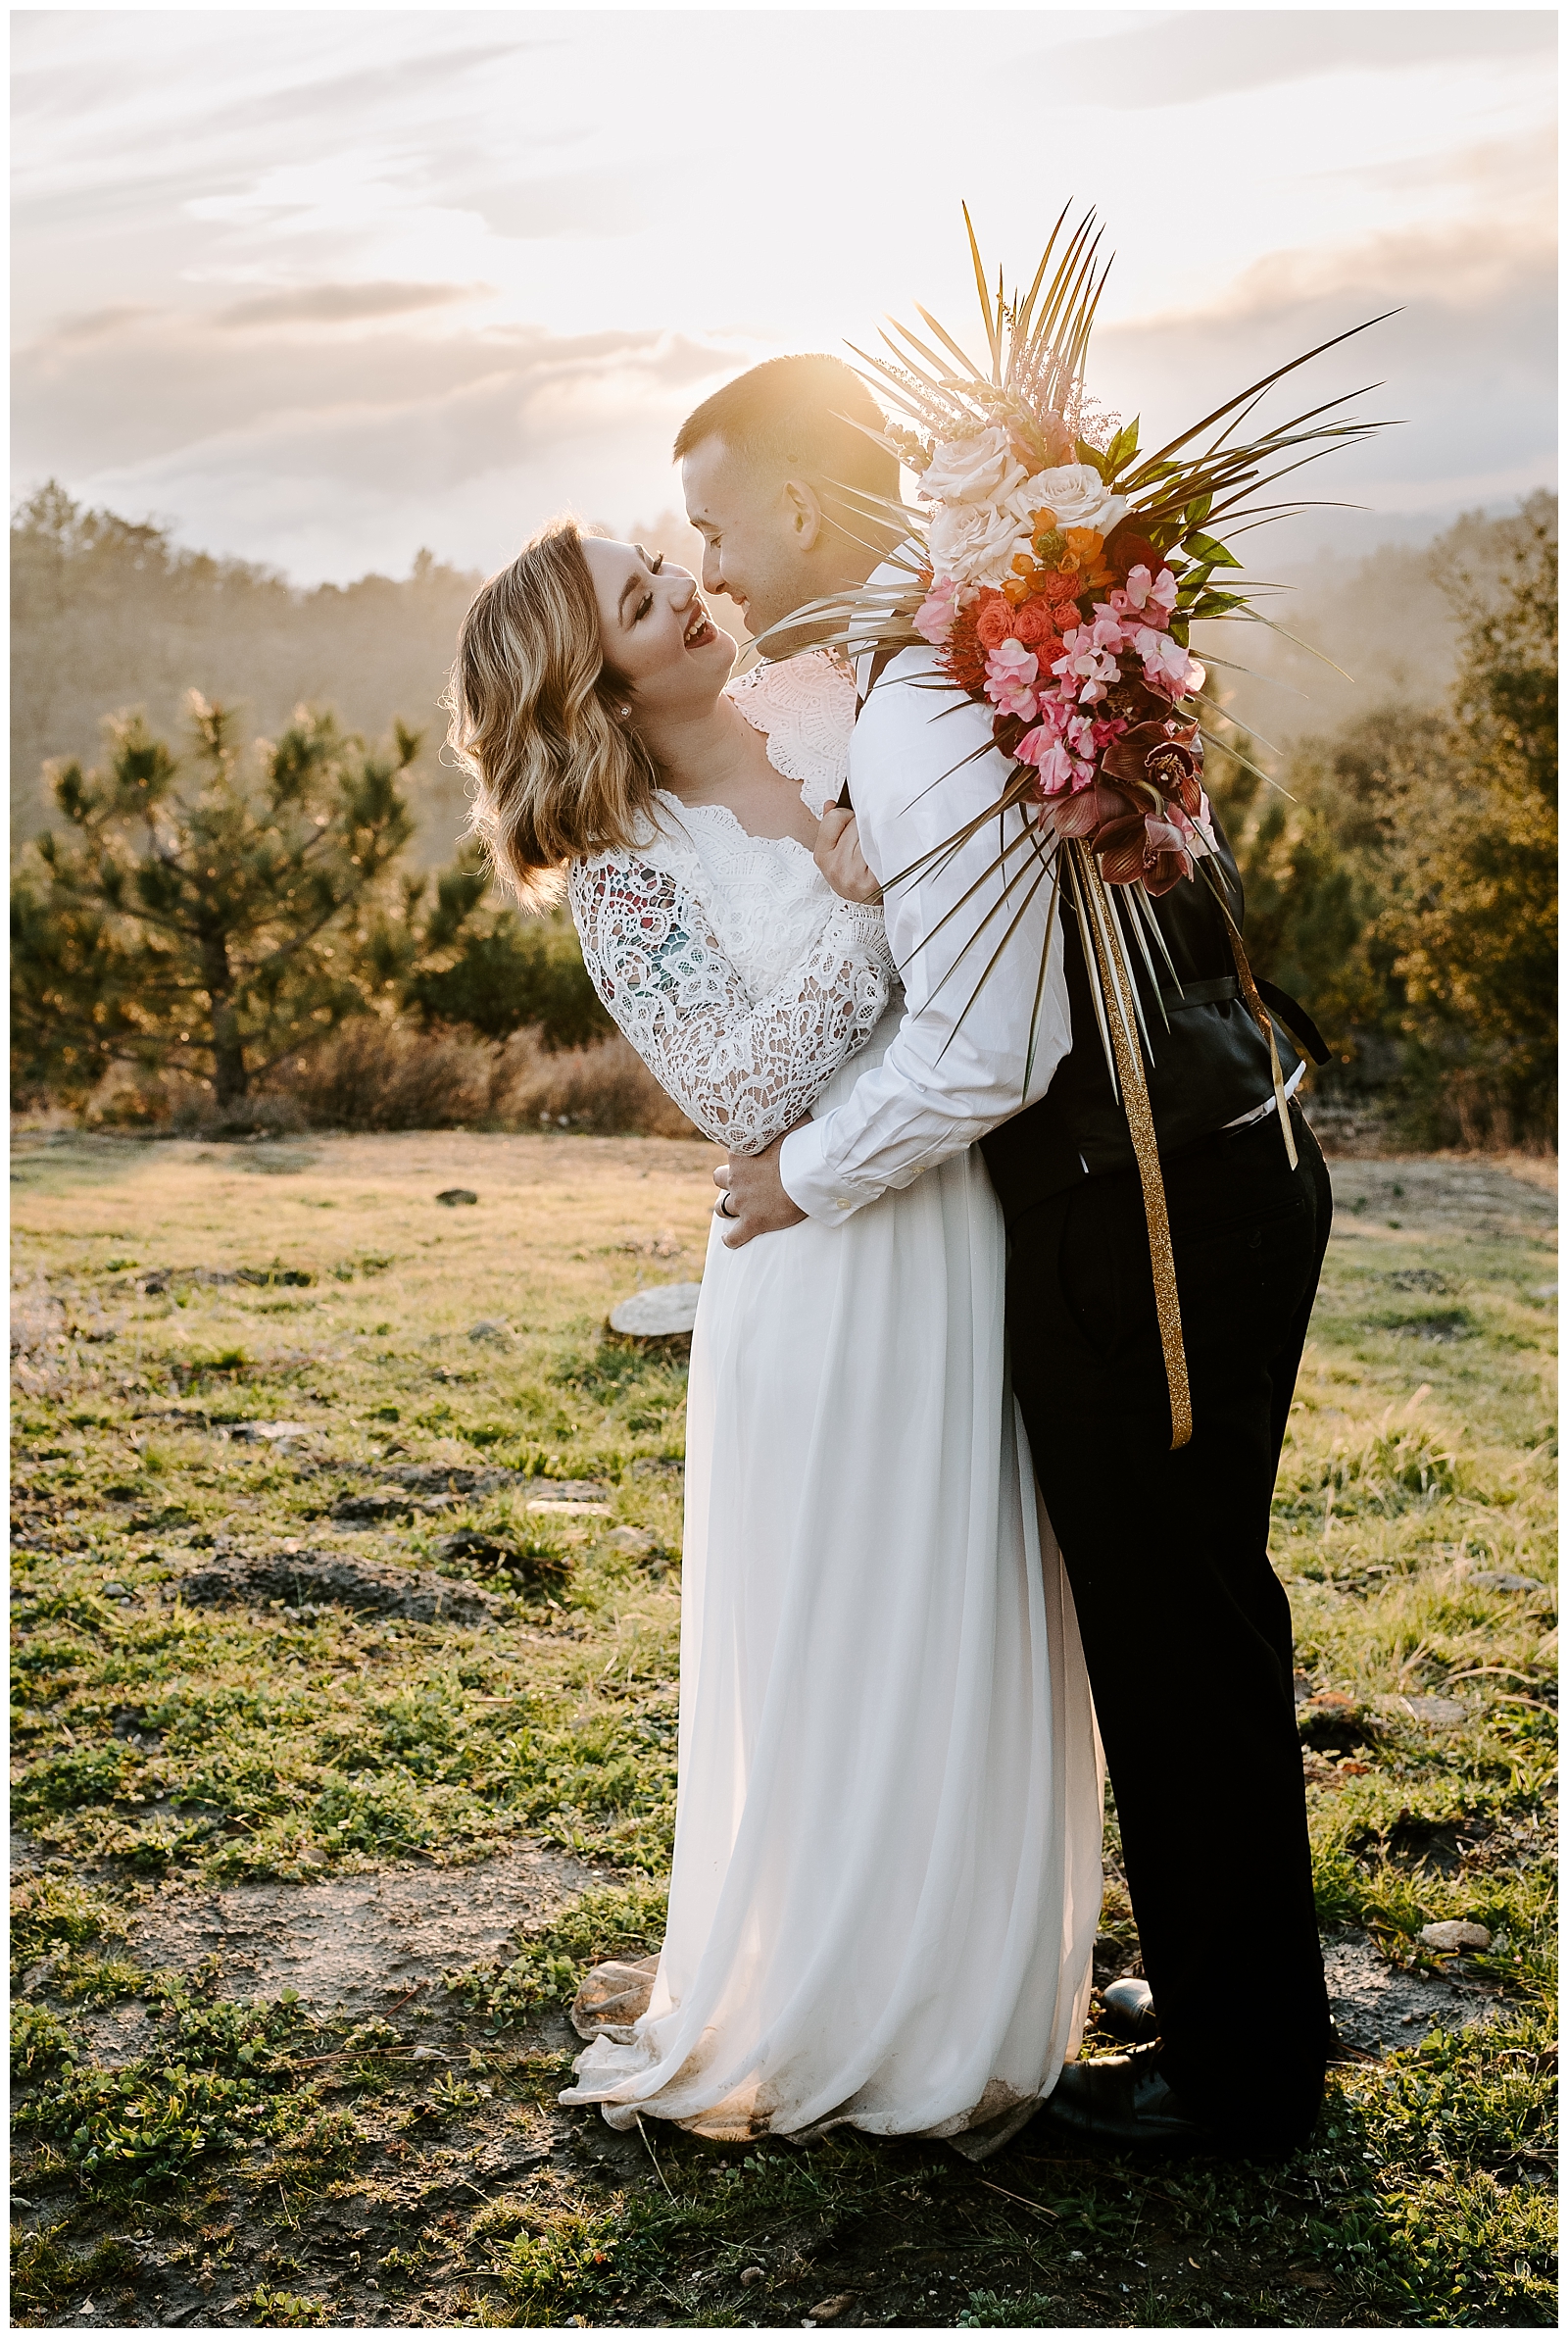 adventurous couple enjoys a first kiss during their mountain elopement in California